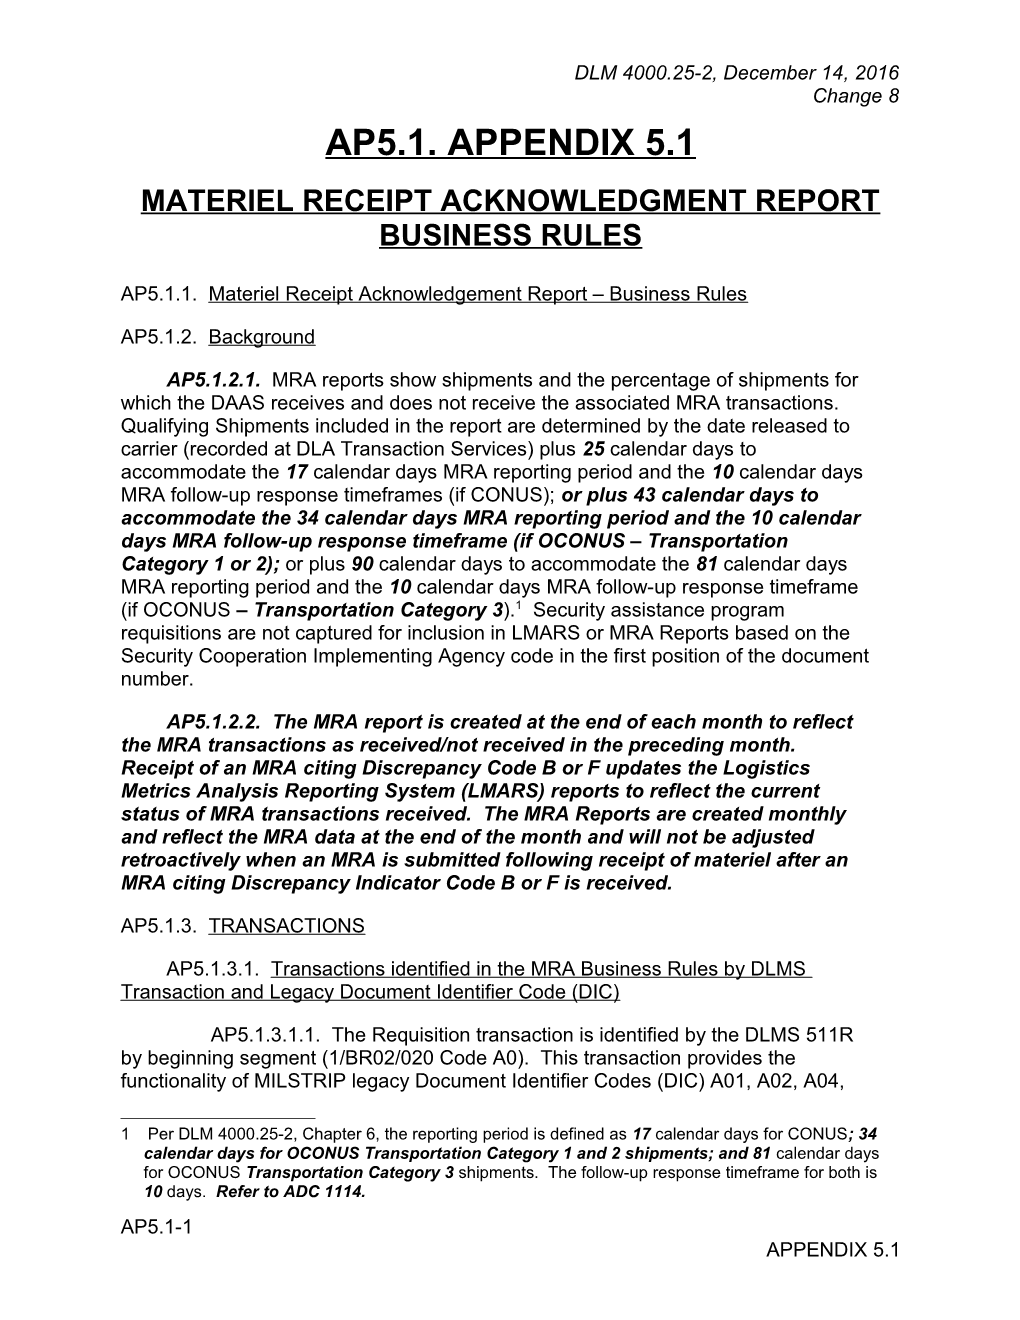 Appendix 5.1 - MRA Report Business Rules